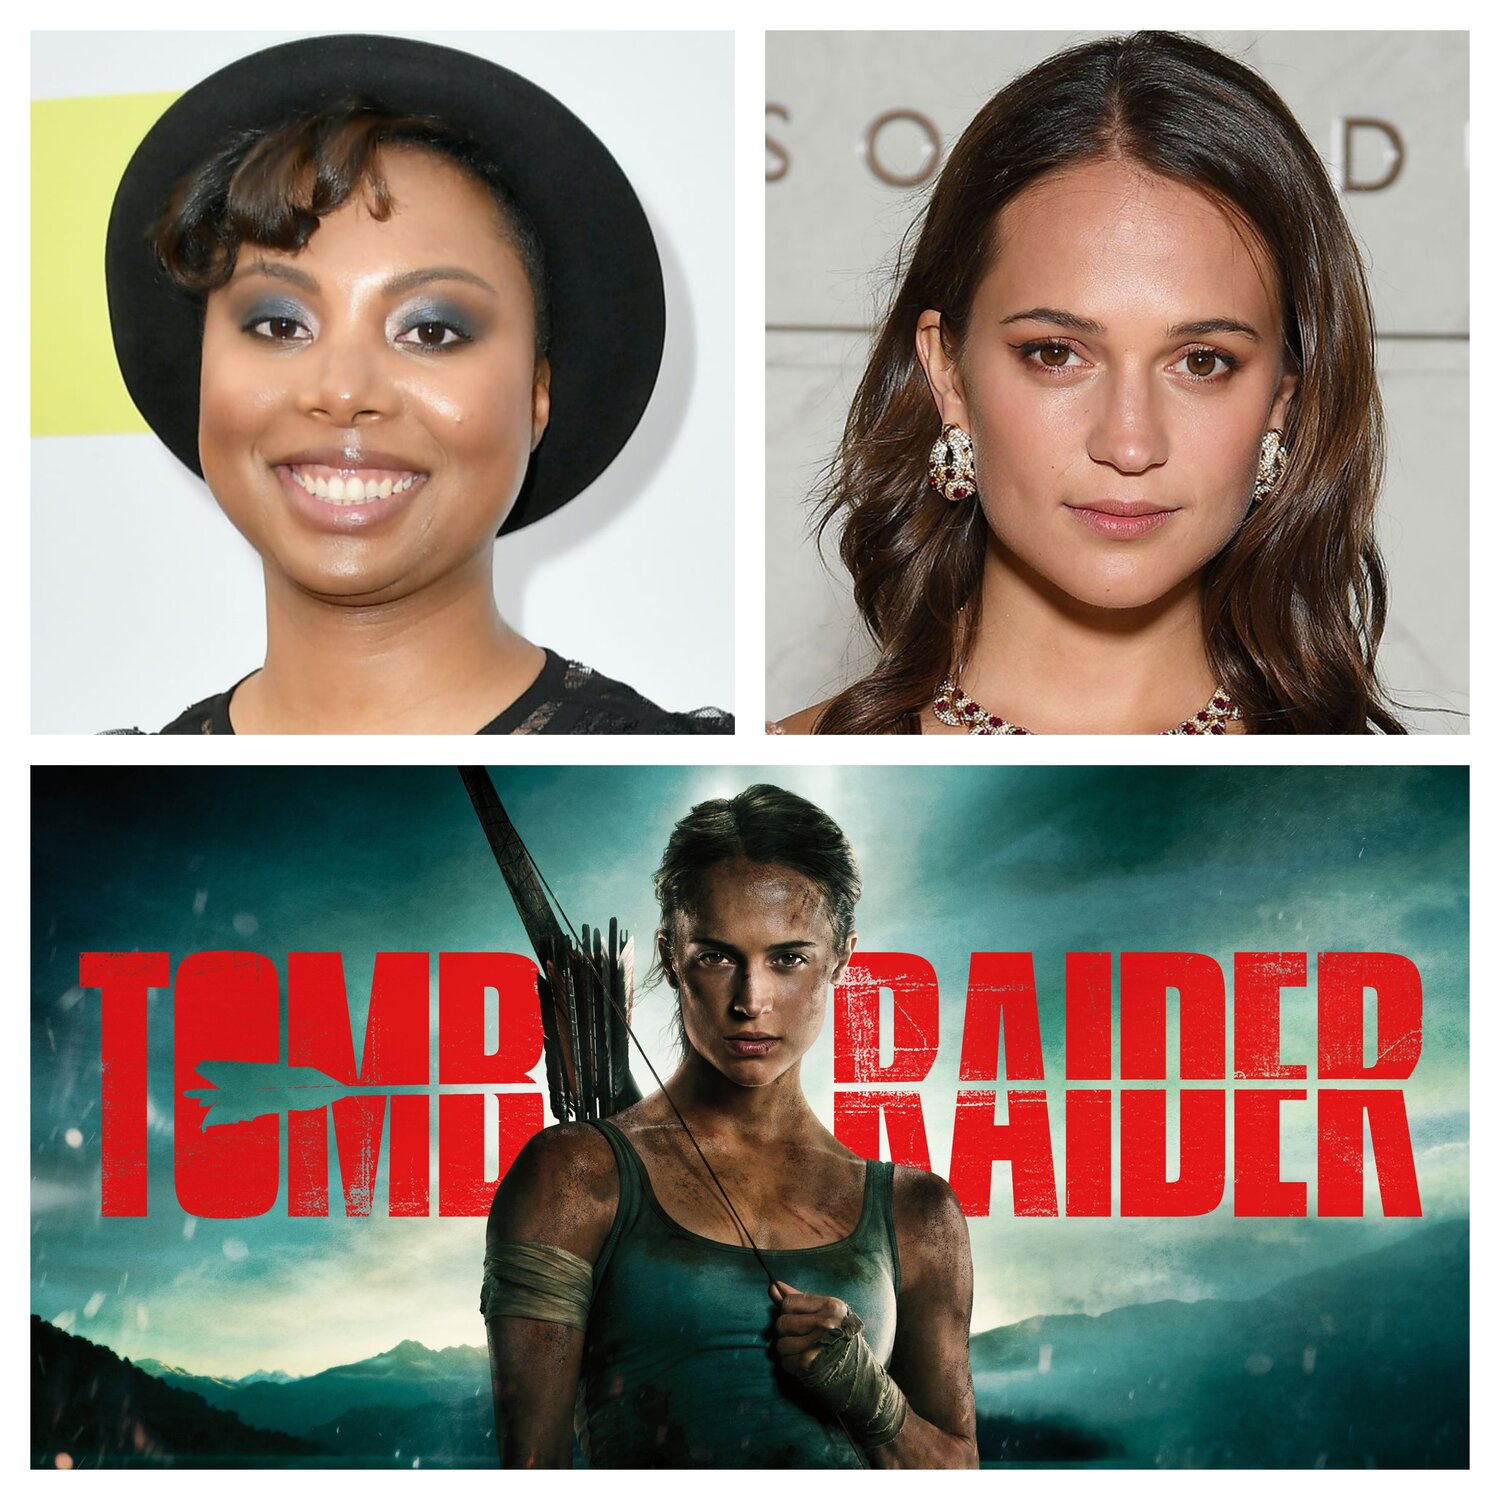 The new Tomb Raider movie, starring Alicia Vikander, reviewed.